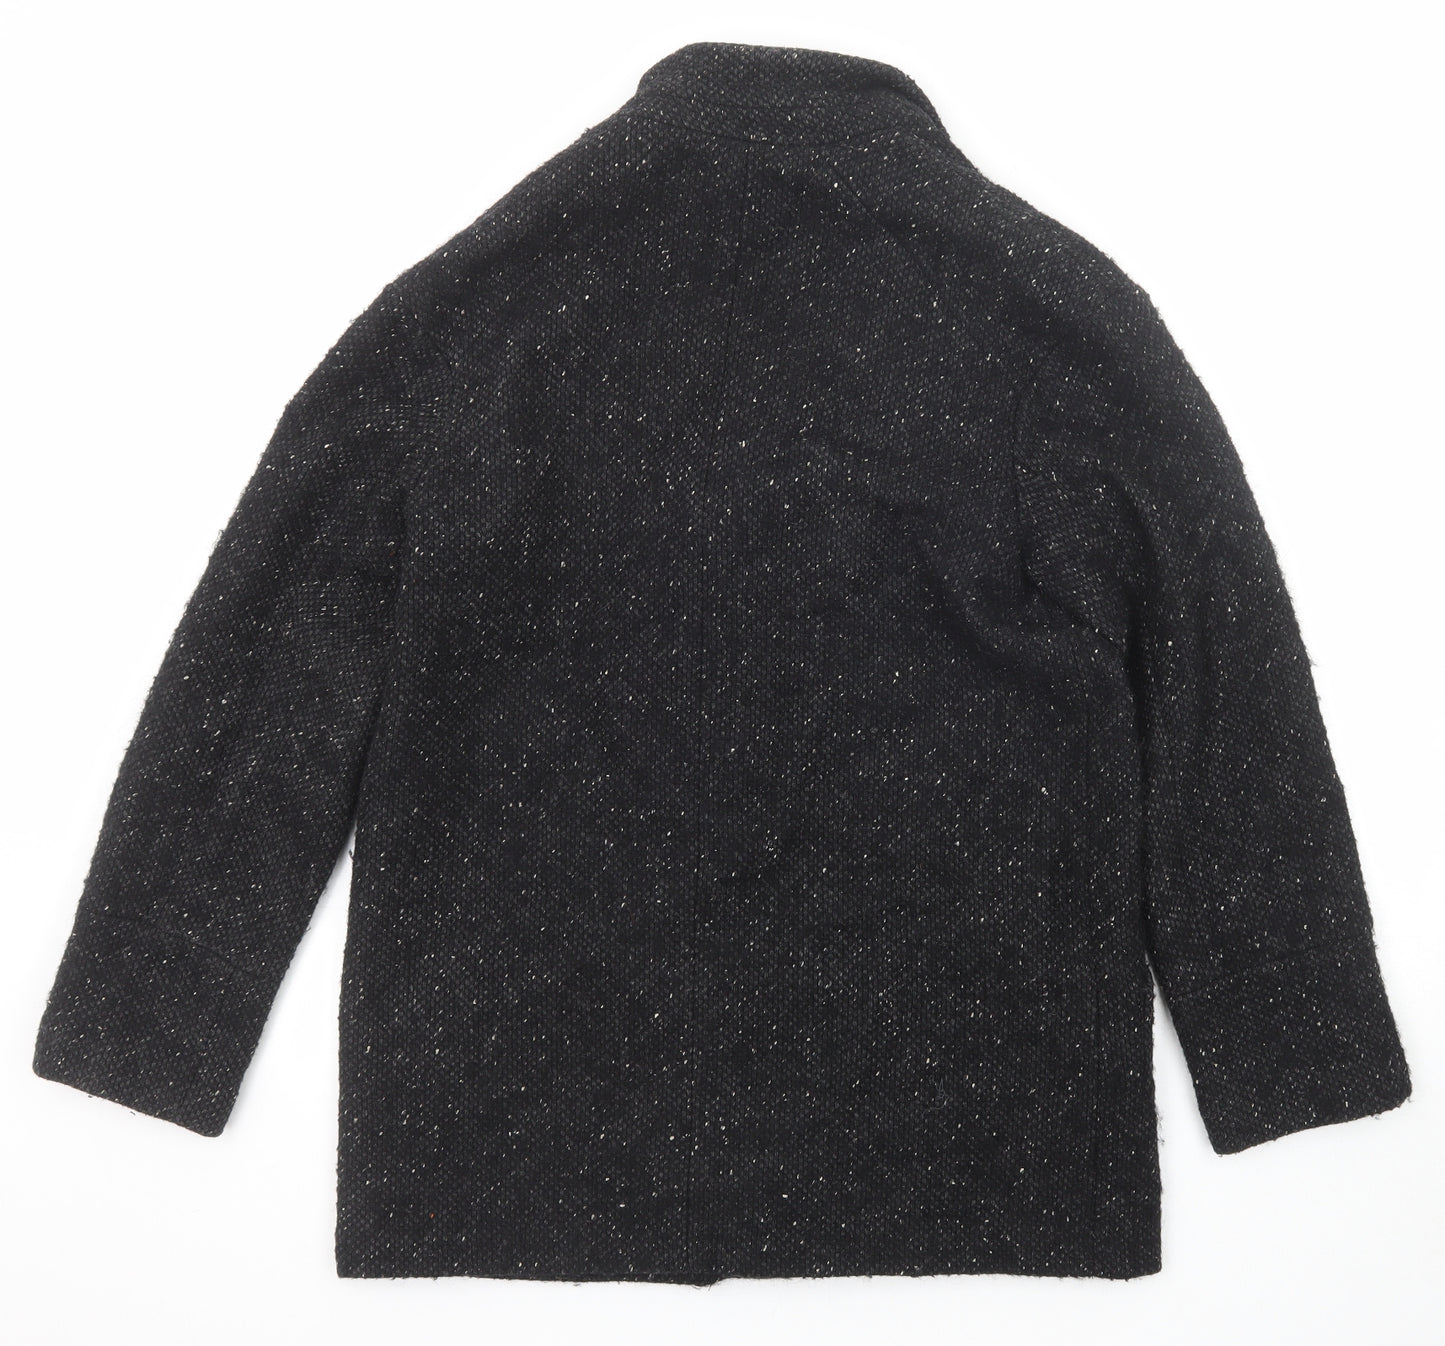 Mango Womens Black Jacket Blazer Size L Button - Speckled